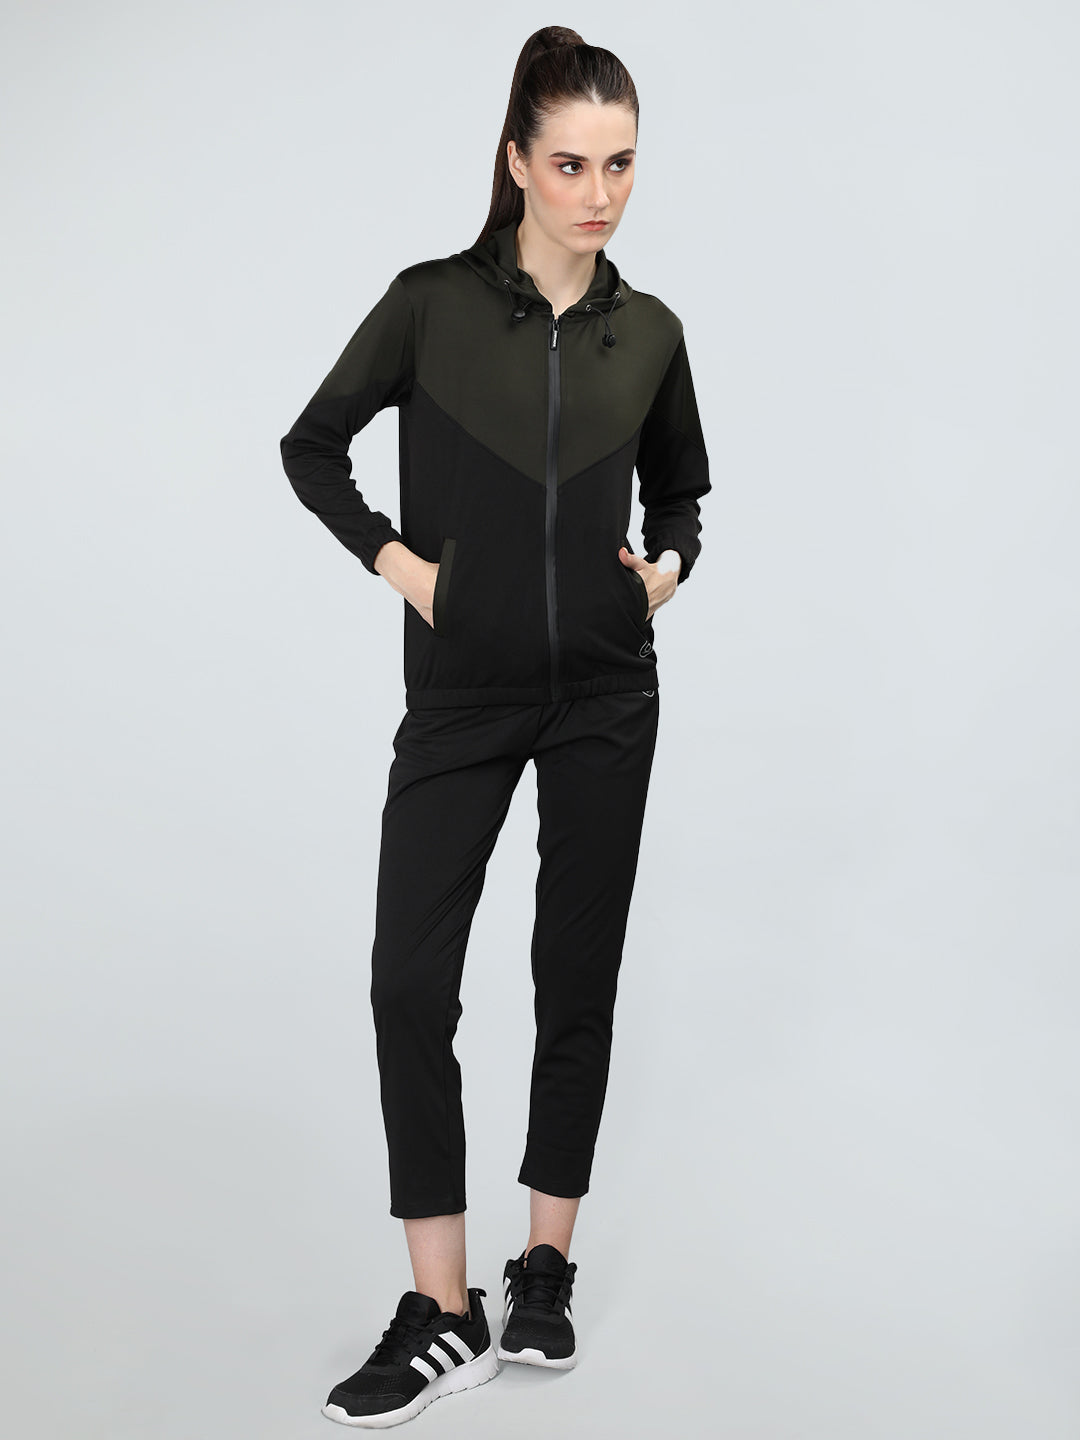 Women Sports Zipper Running Winter Track Suit| CHKOKKO